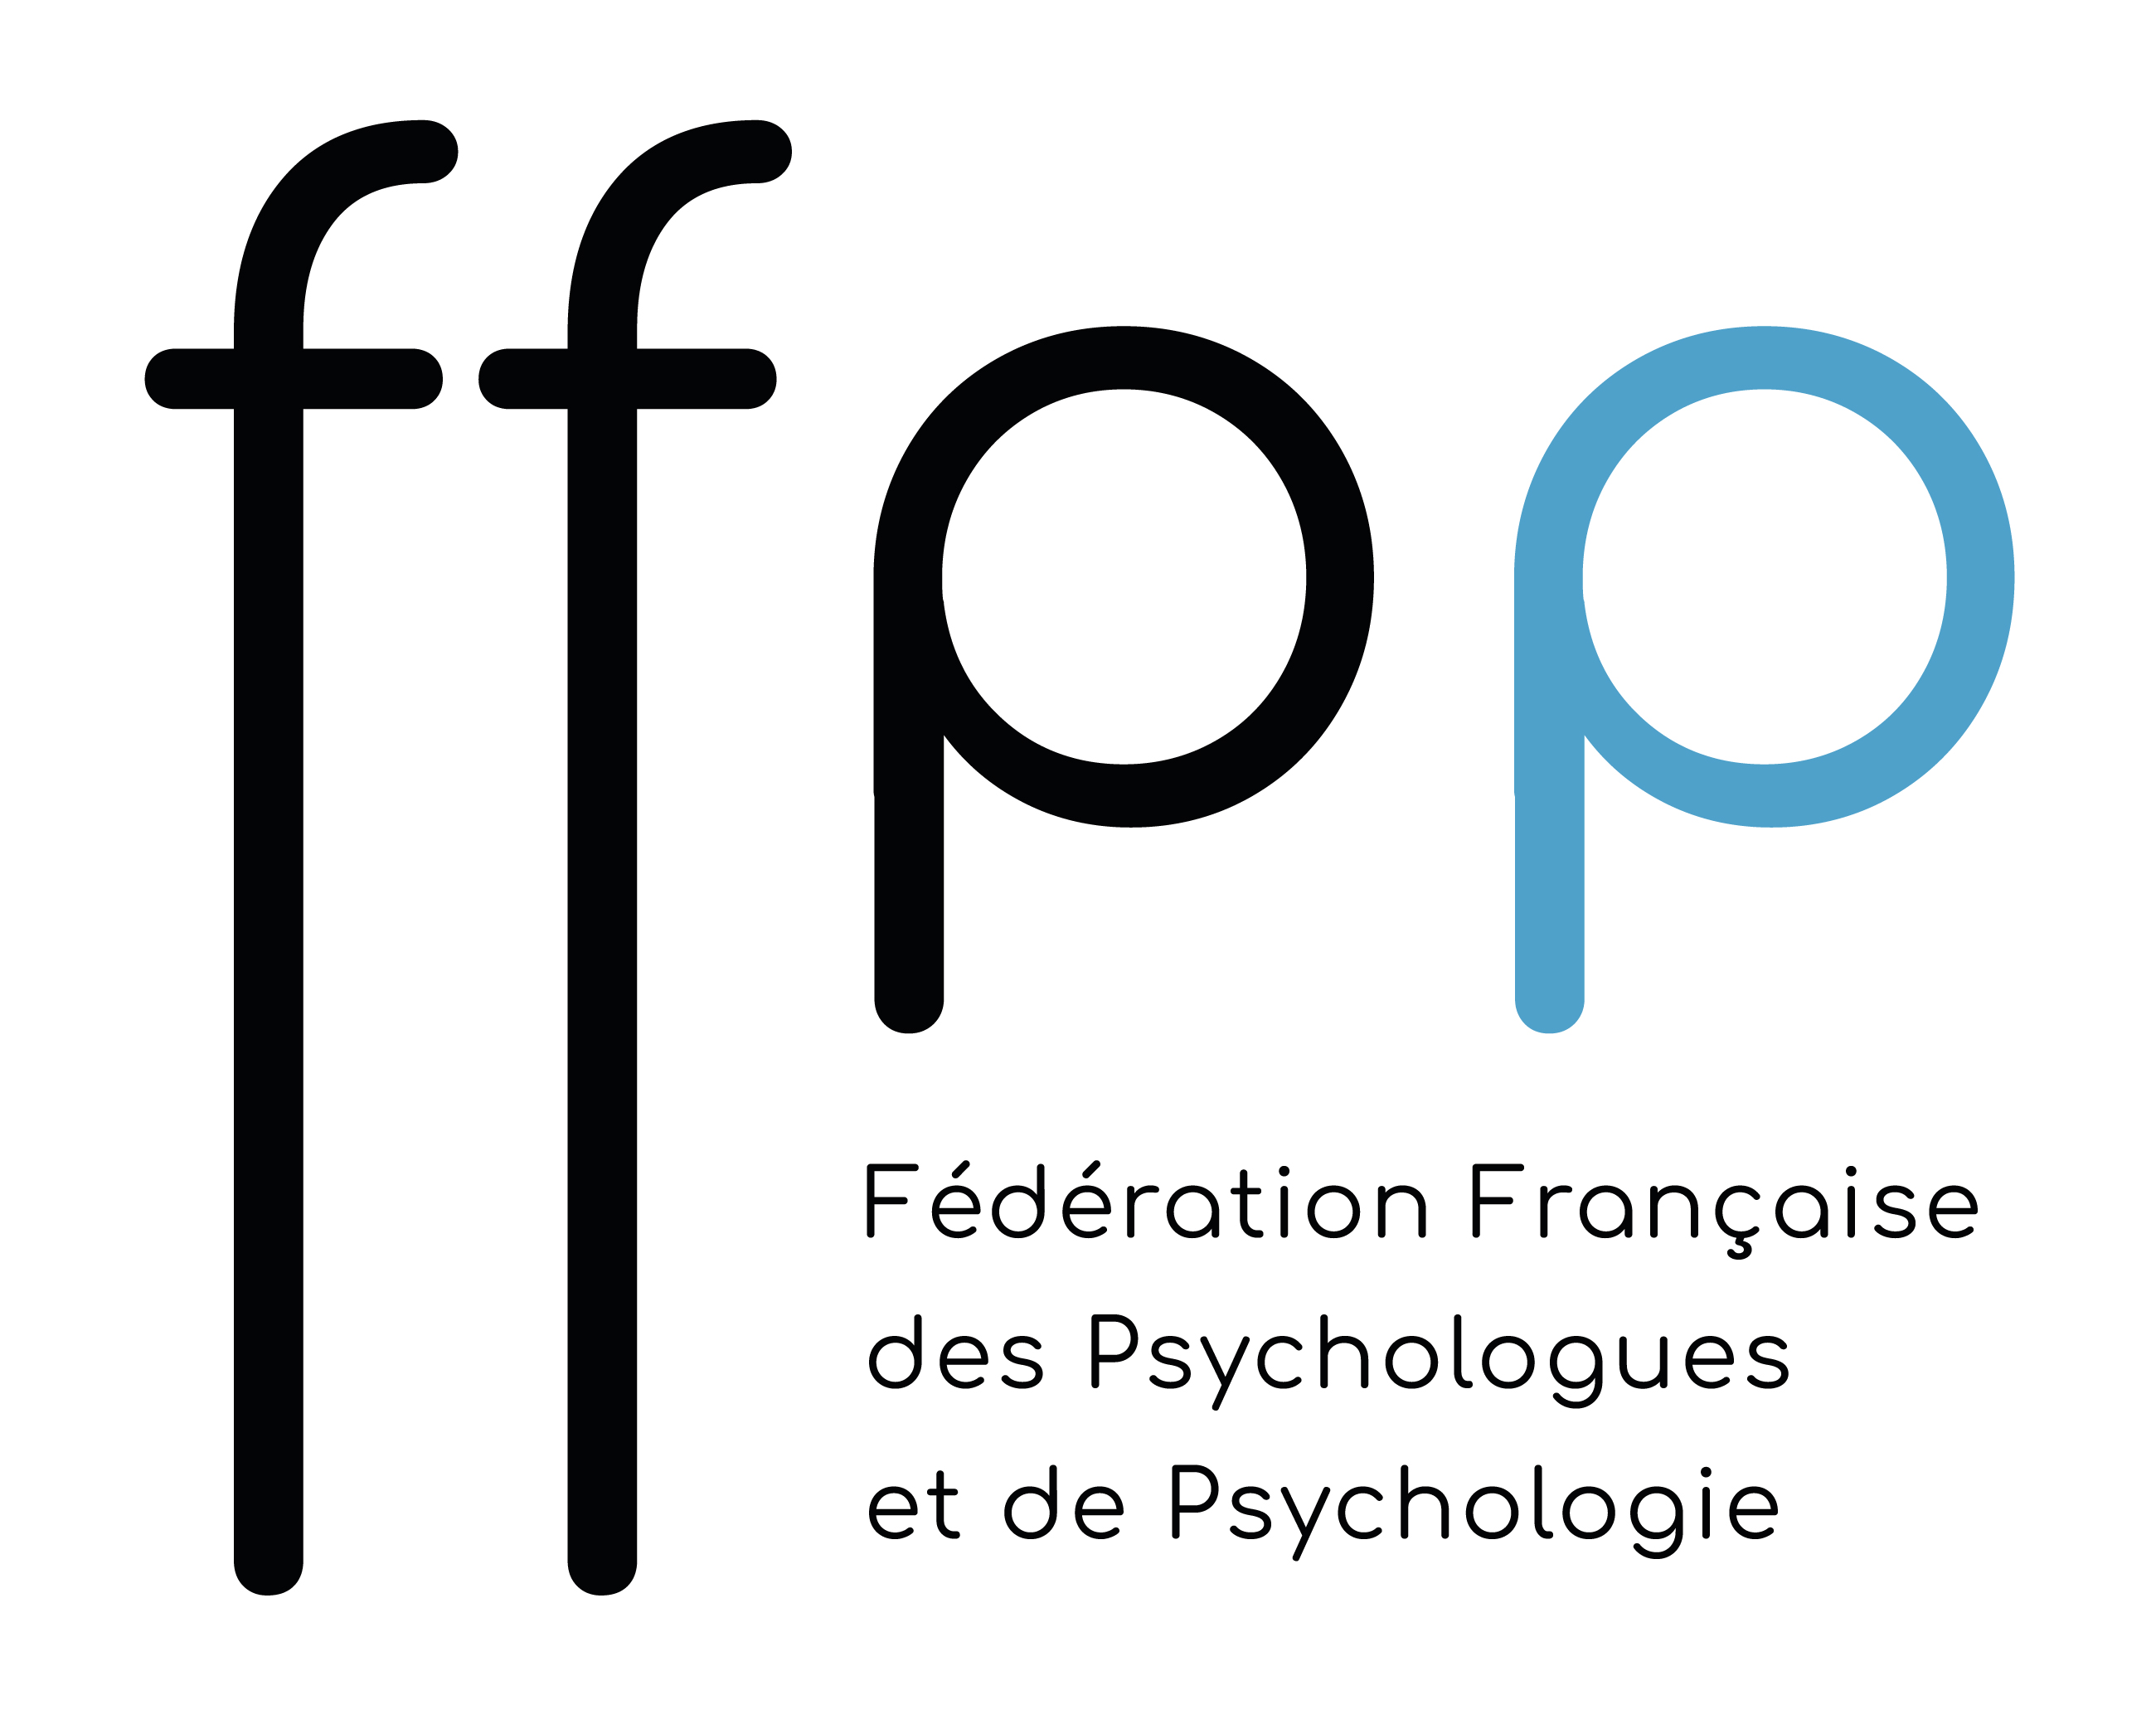 Logo FFPP